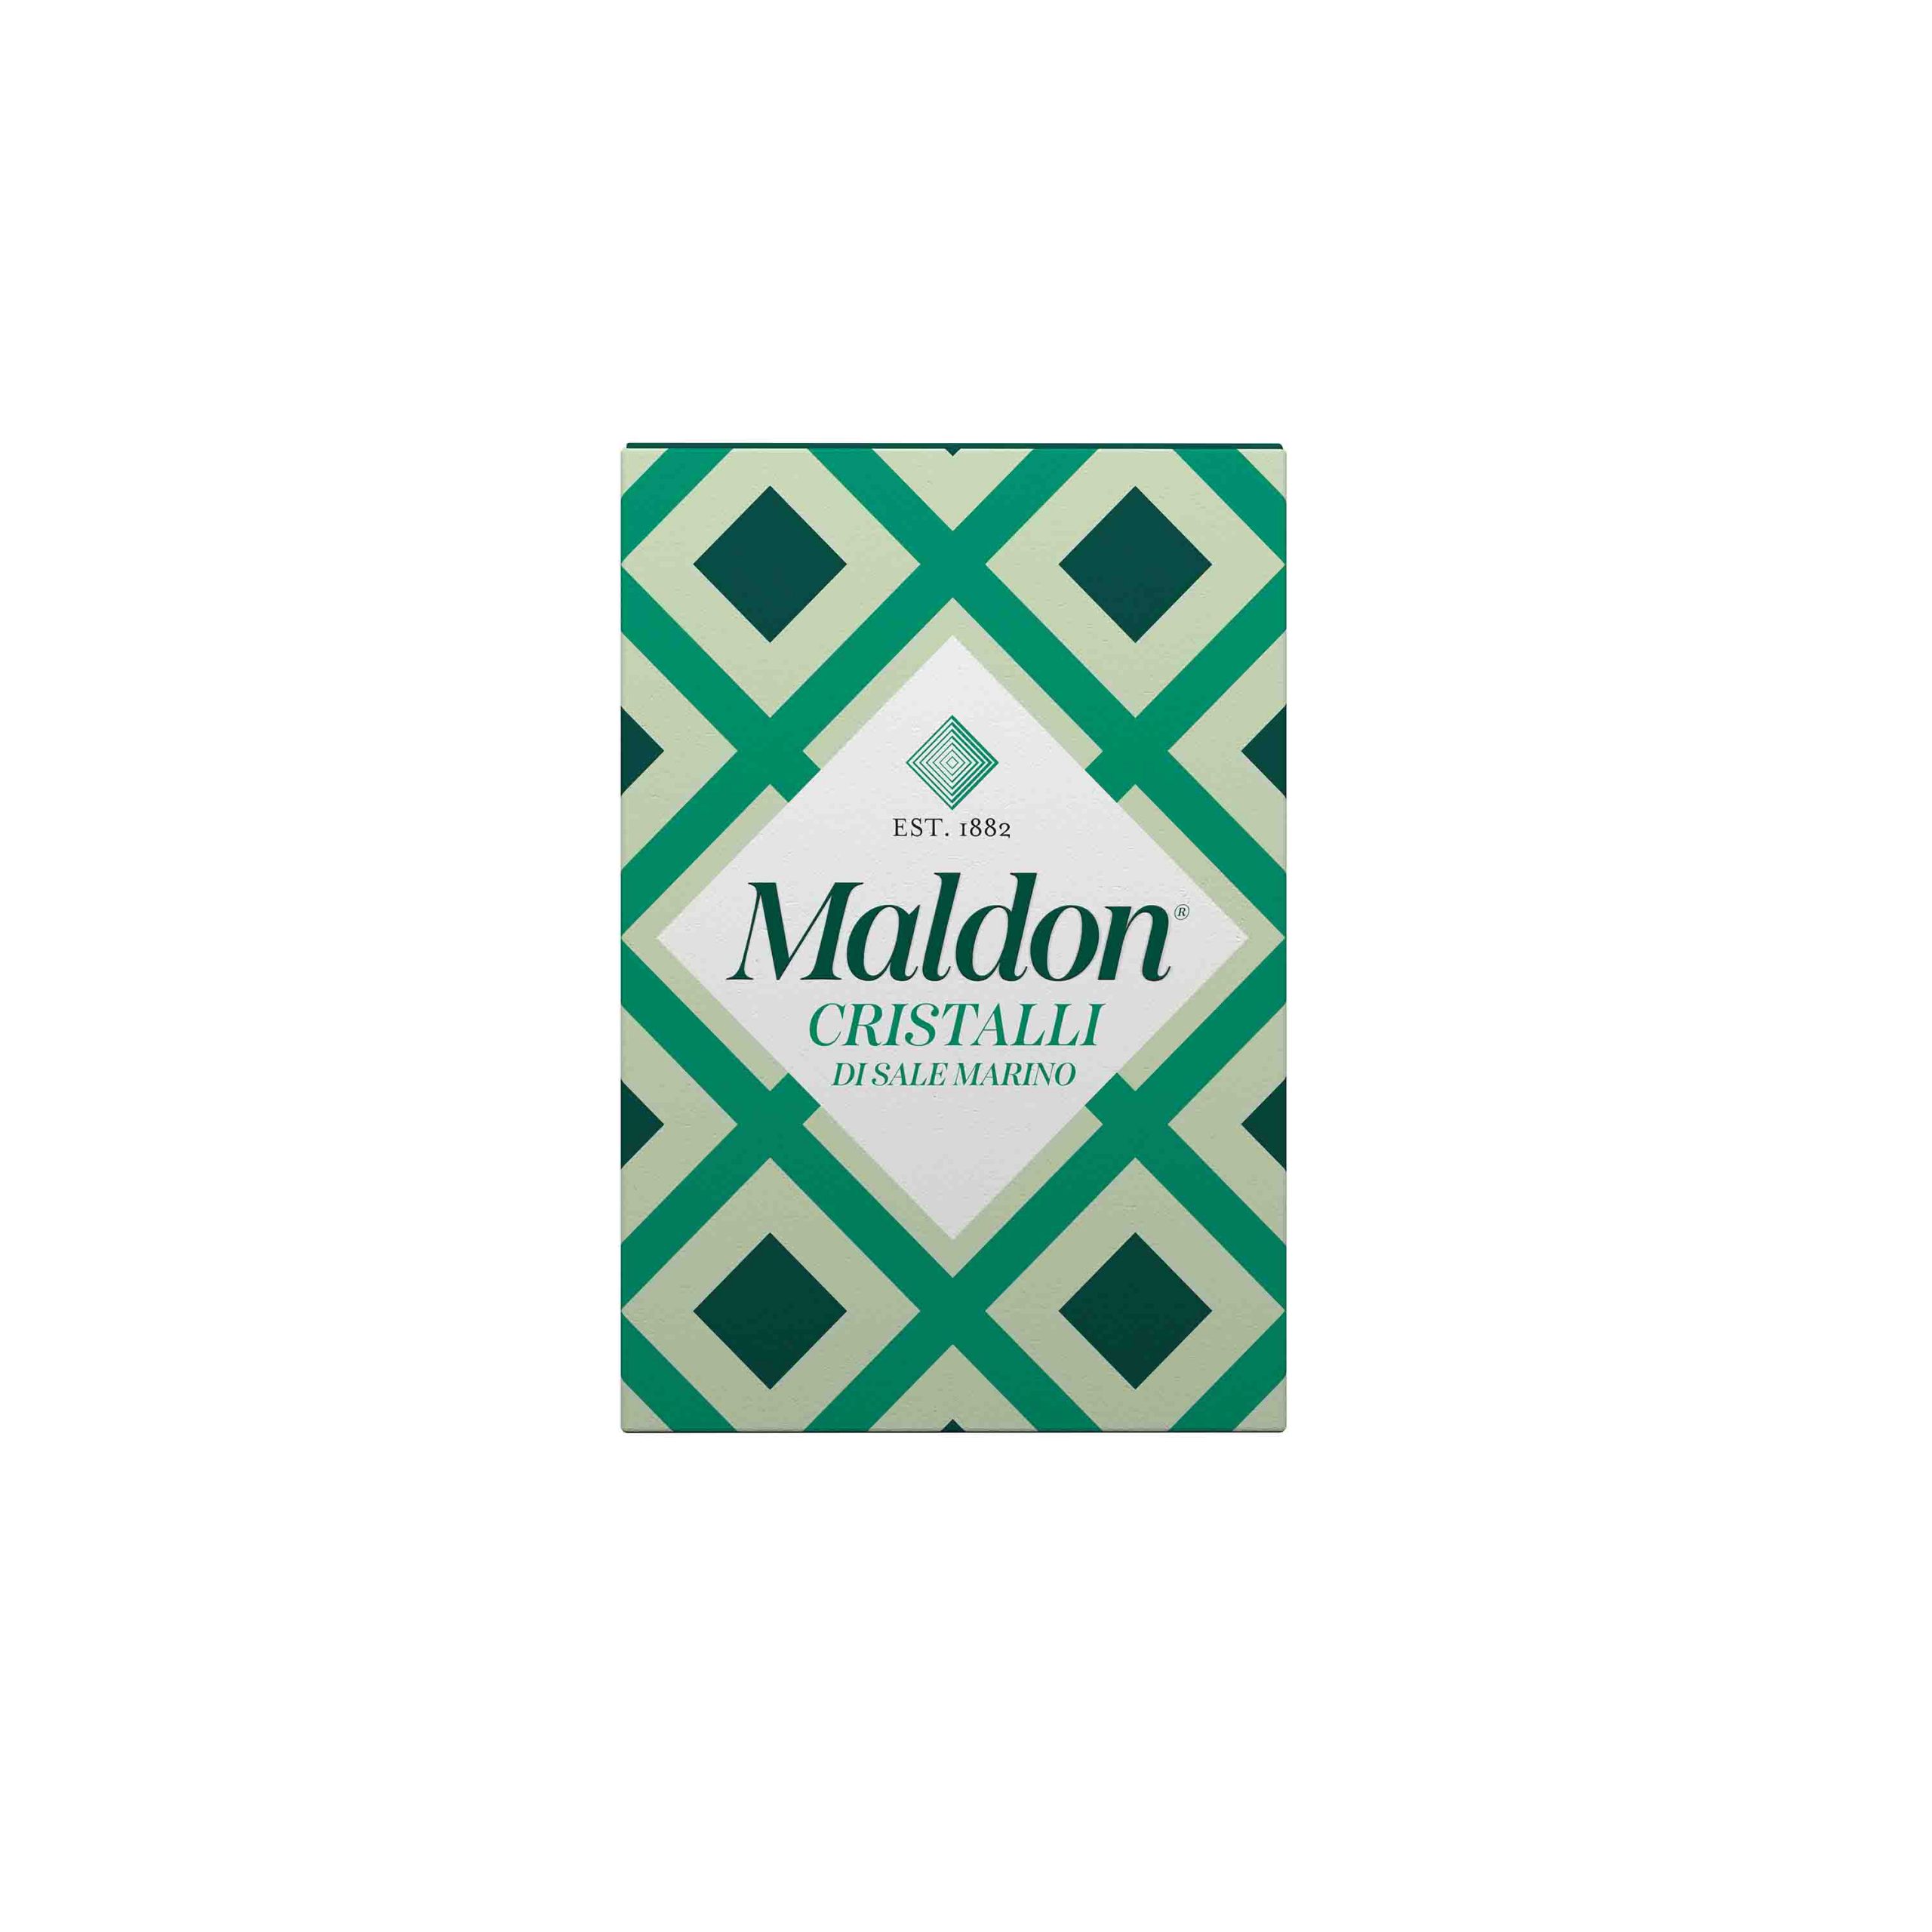 sm02_maldon-original-125g-italy-copia